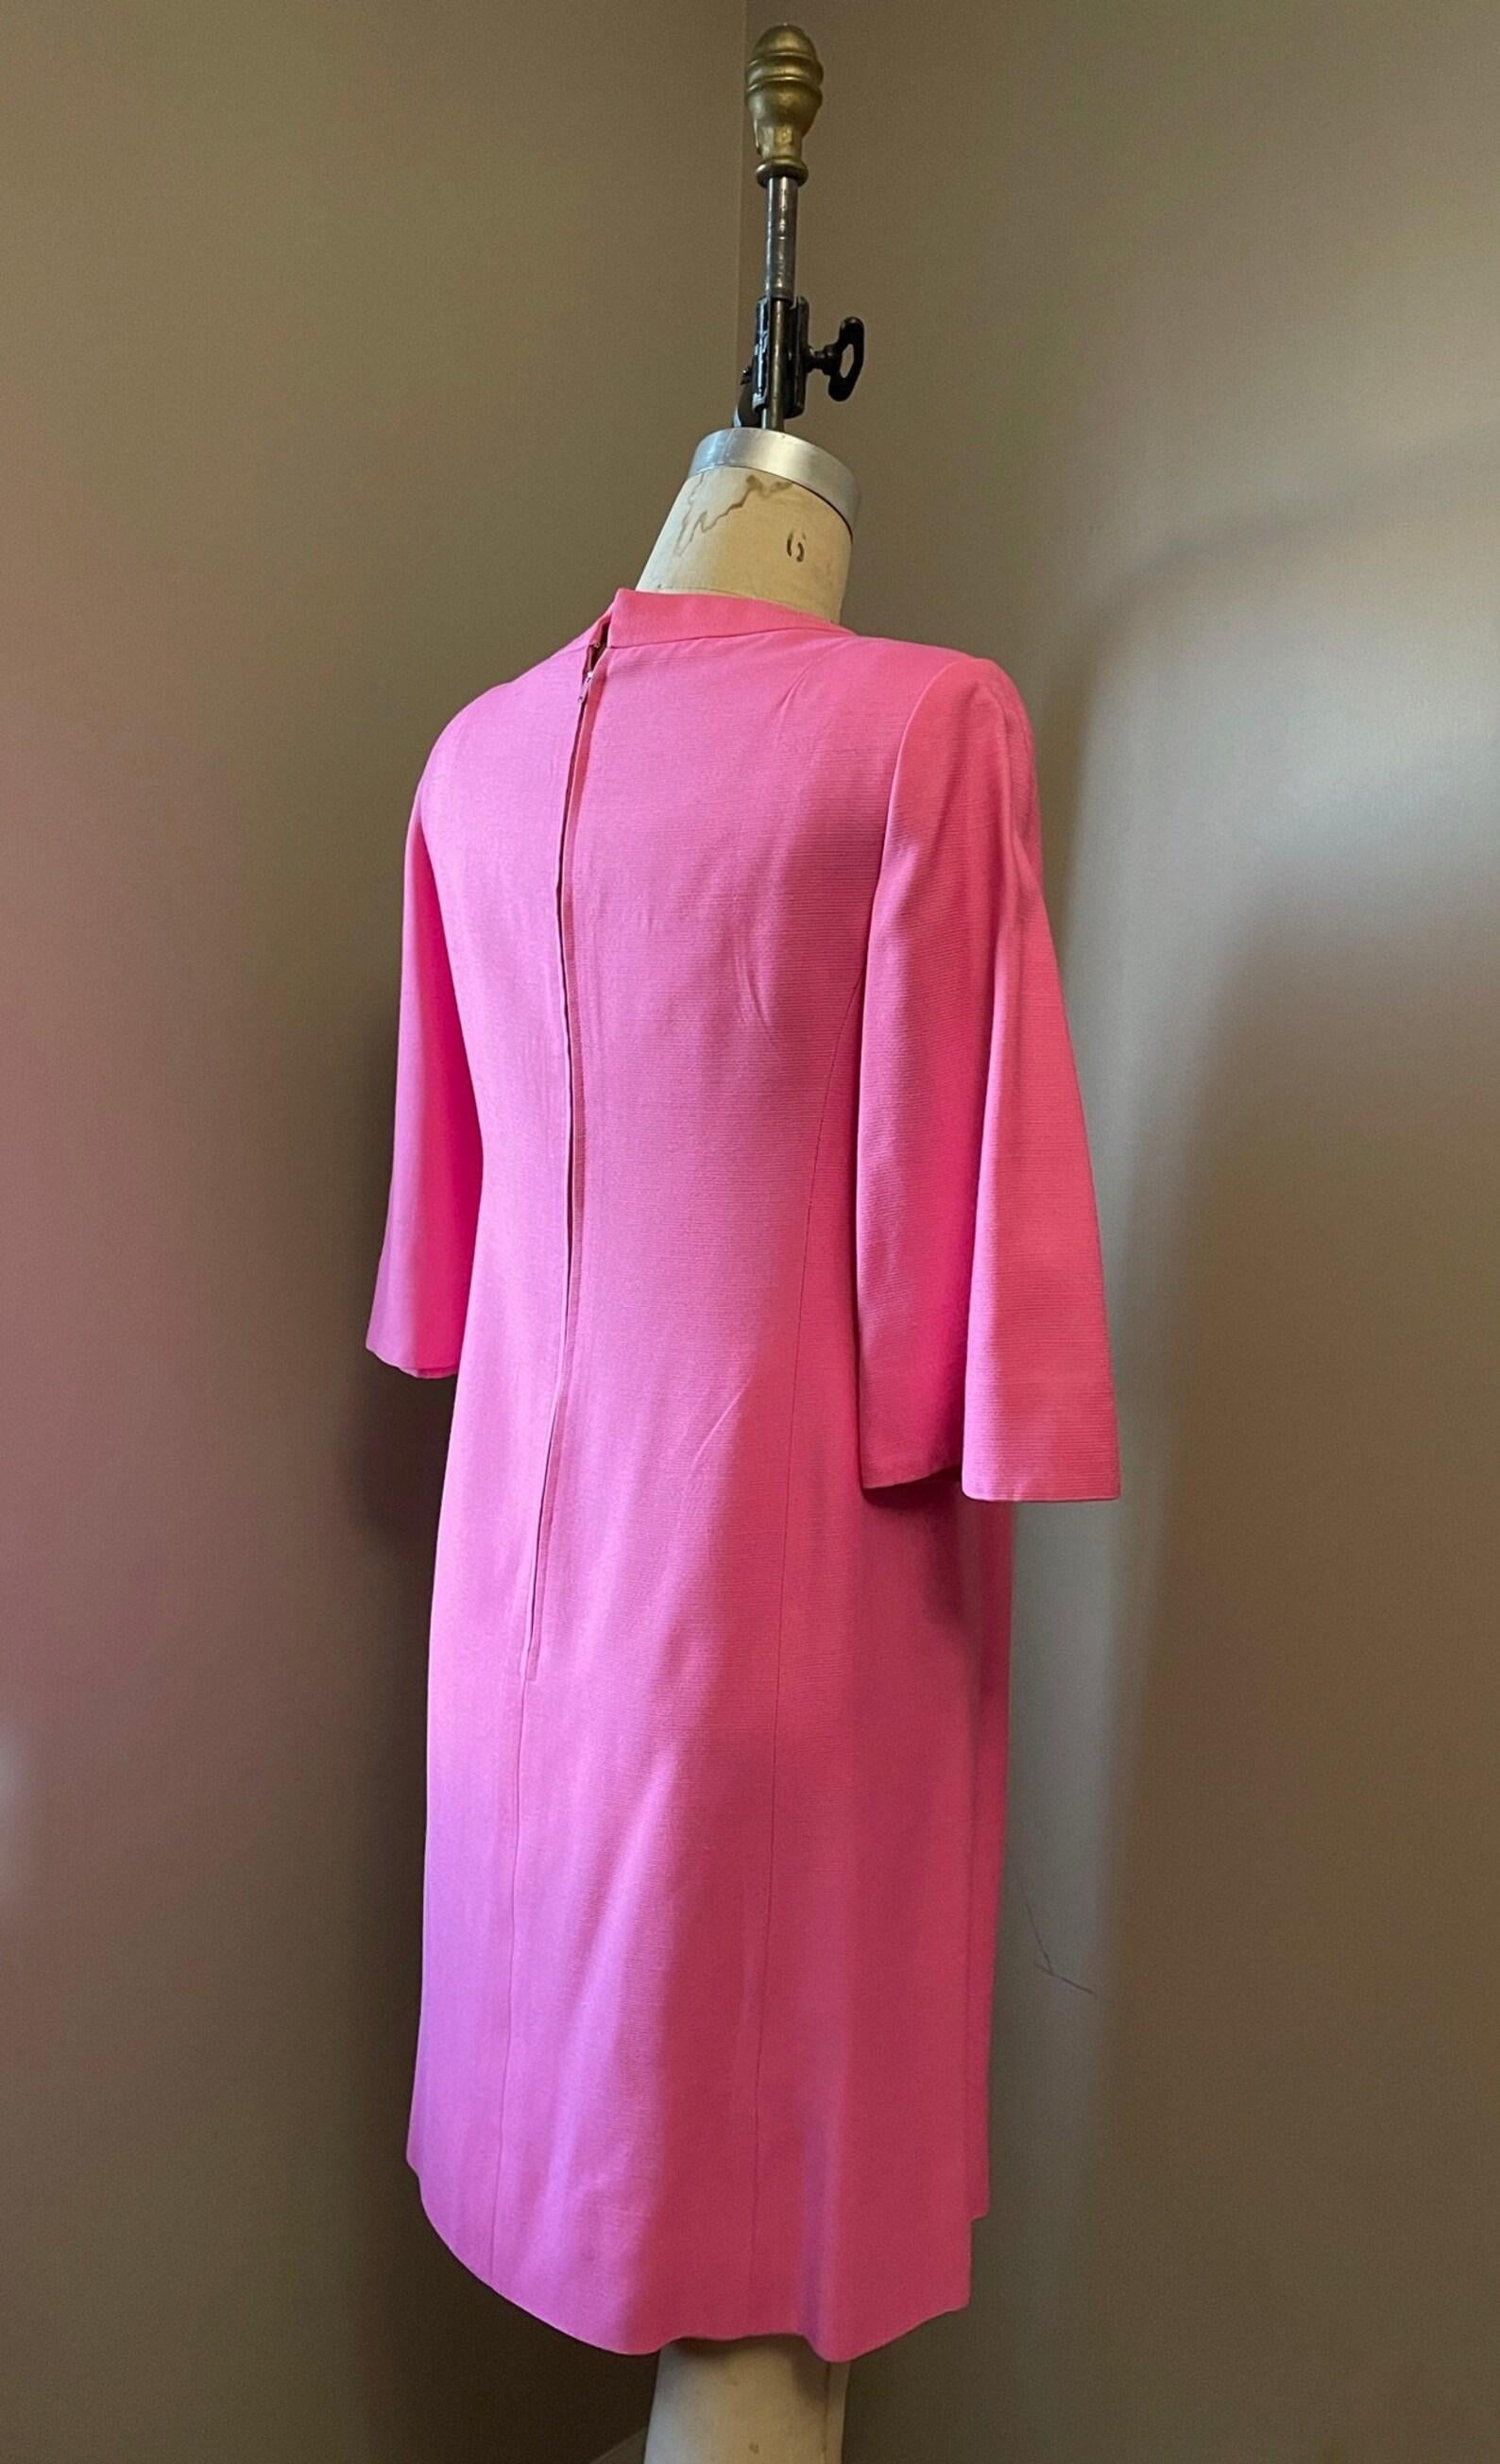 Women's Suzy Perette Pink Shift Dress, Circa 1960s For Sale